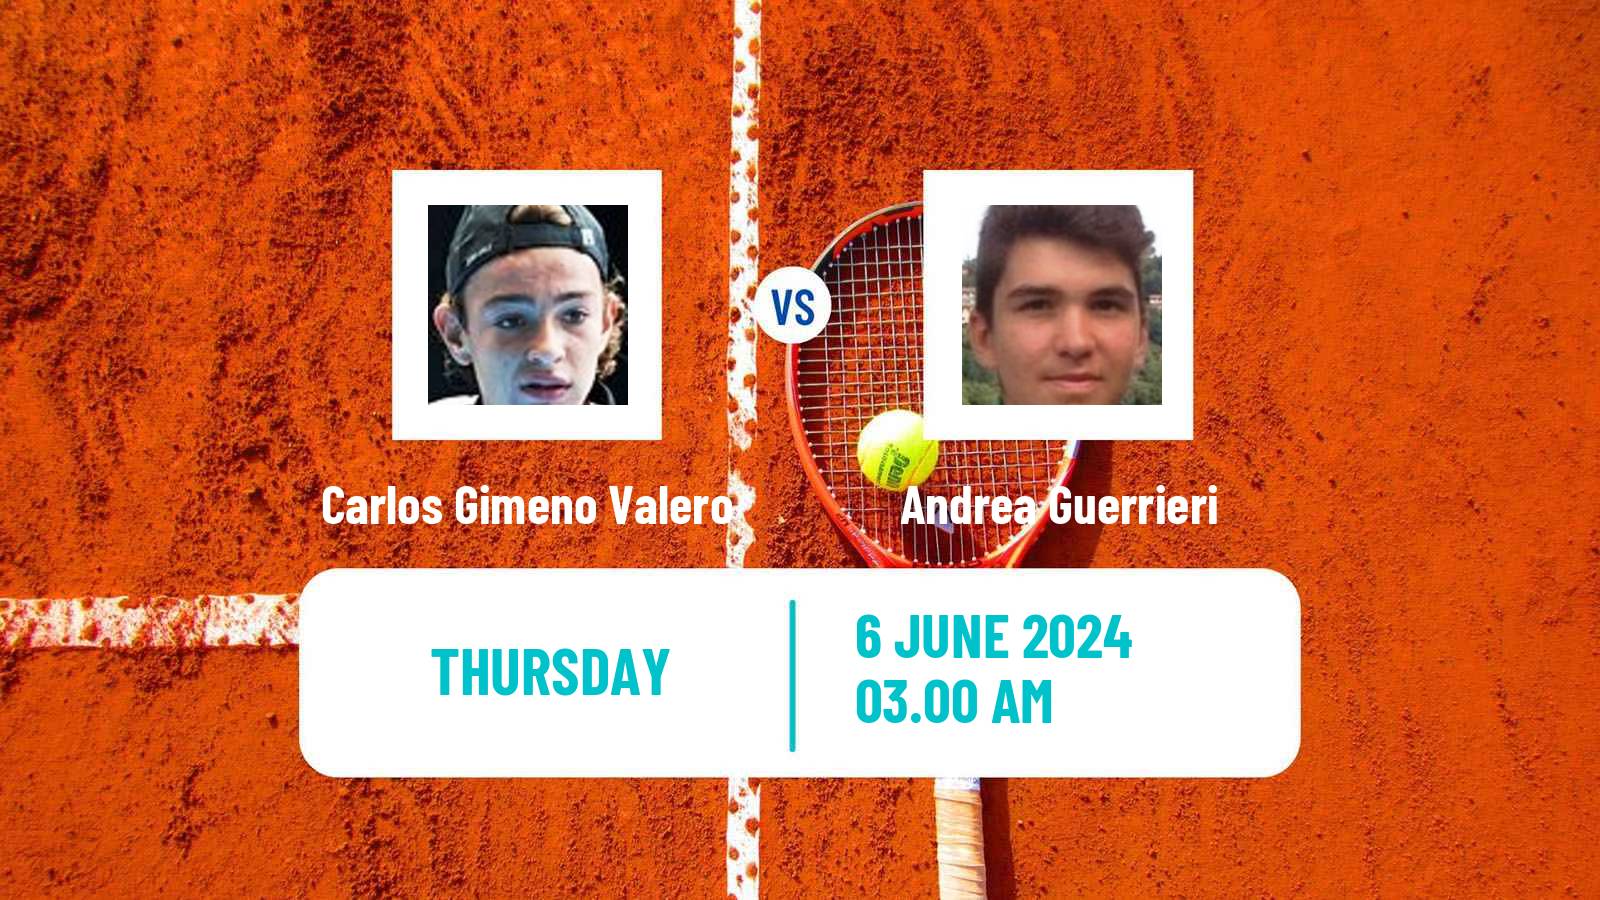 Tennis ITF M25 Cordoba Men Carlos Gimeno Valero - Andrea Guerrieri